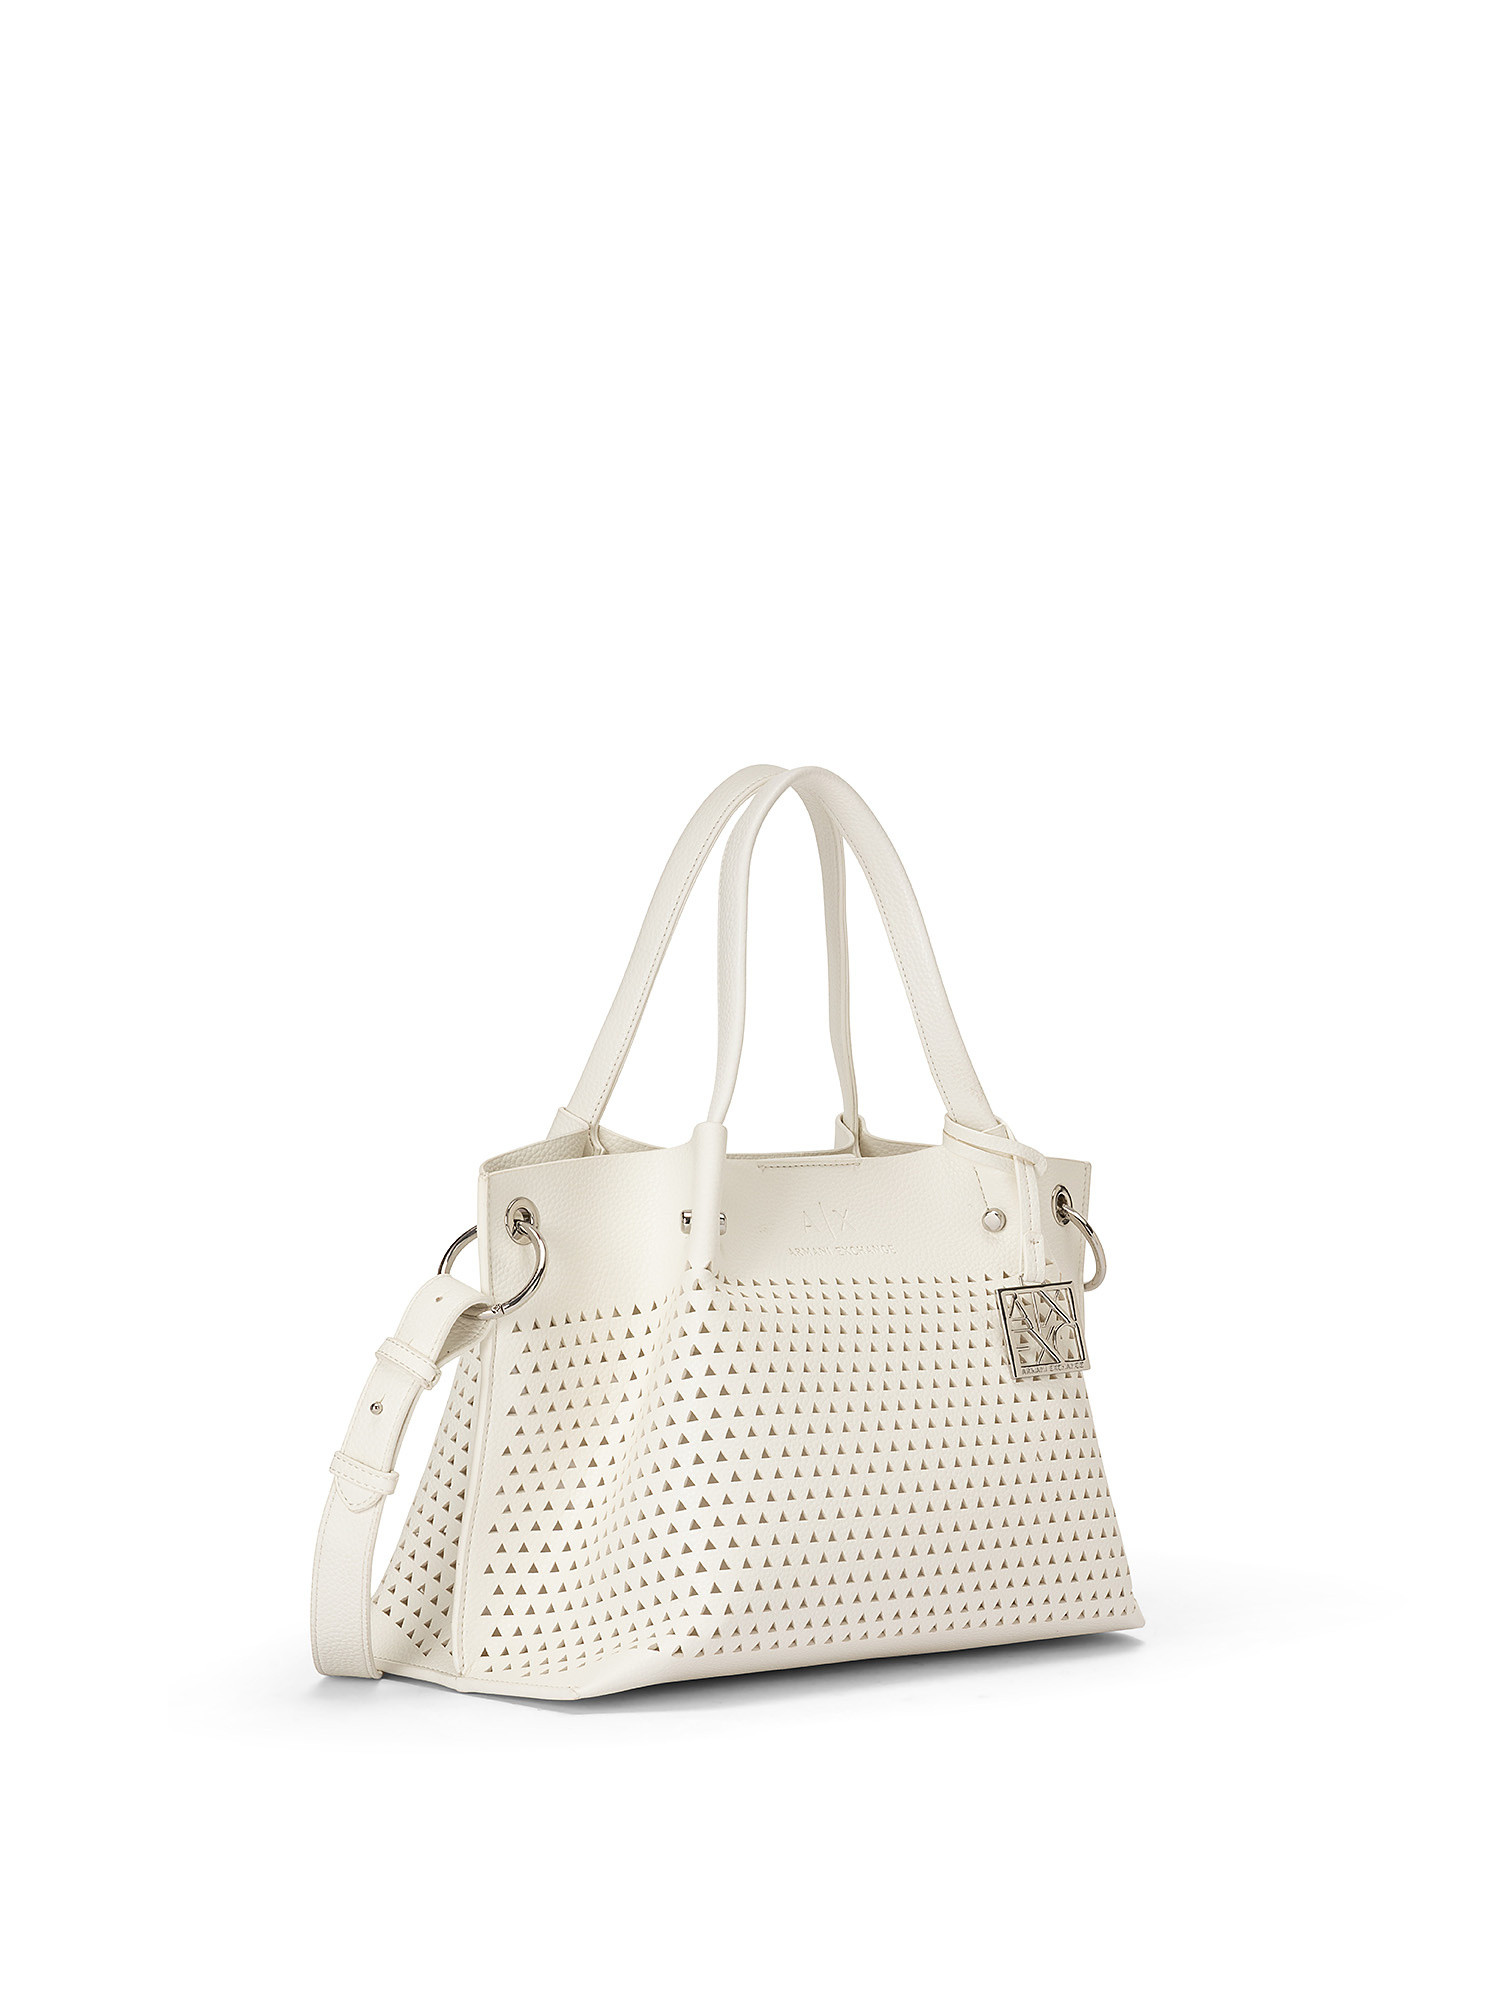 Shopping bag con cerniera superiore, Bianco, large image number 1